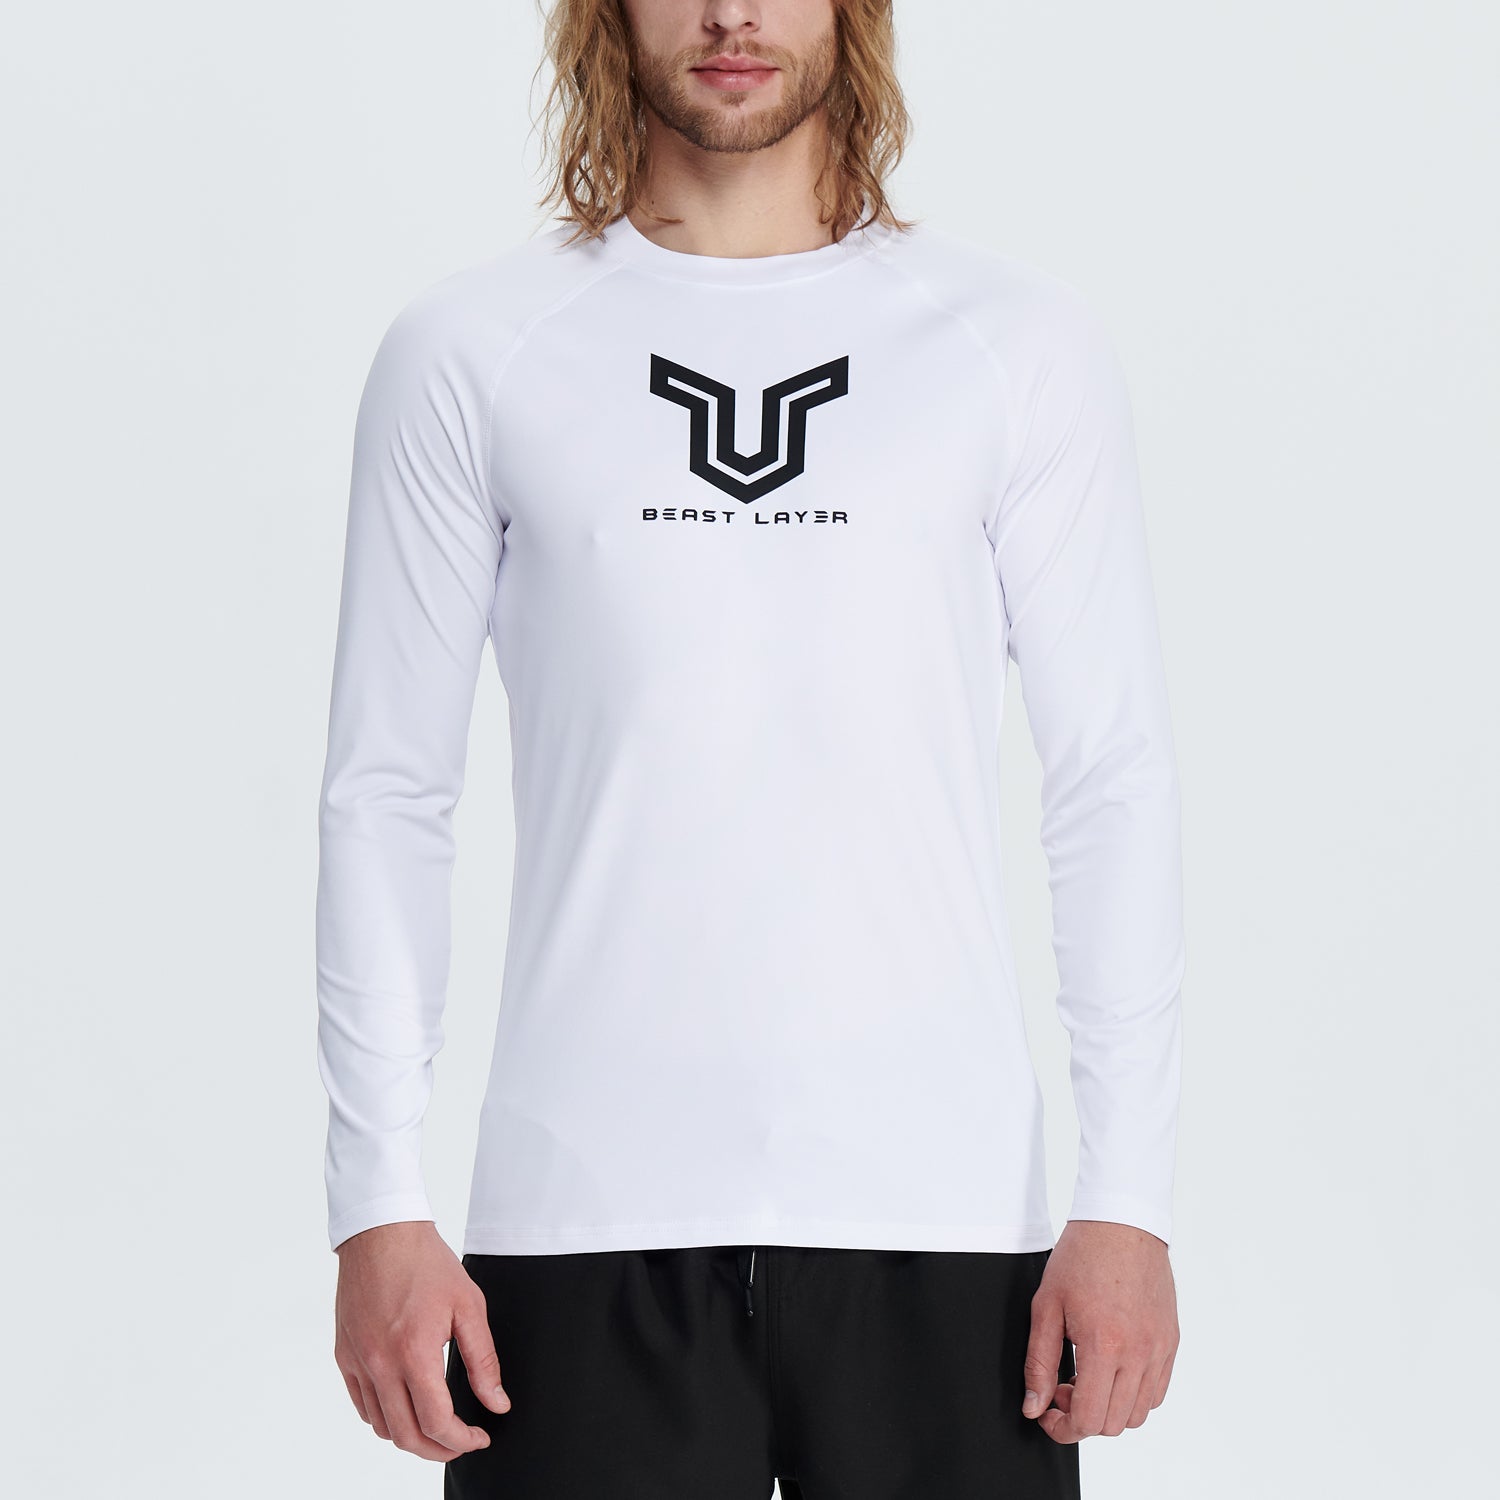 Beast Surf 衬衫 UPF50+ 男士防晒衣 - 白色